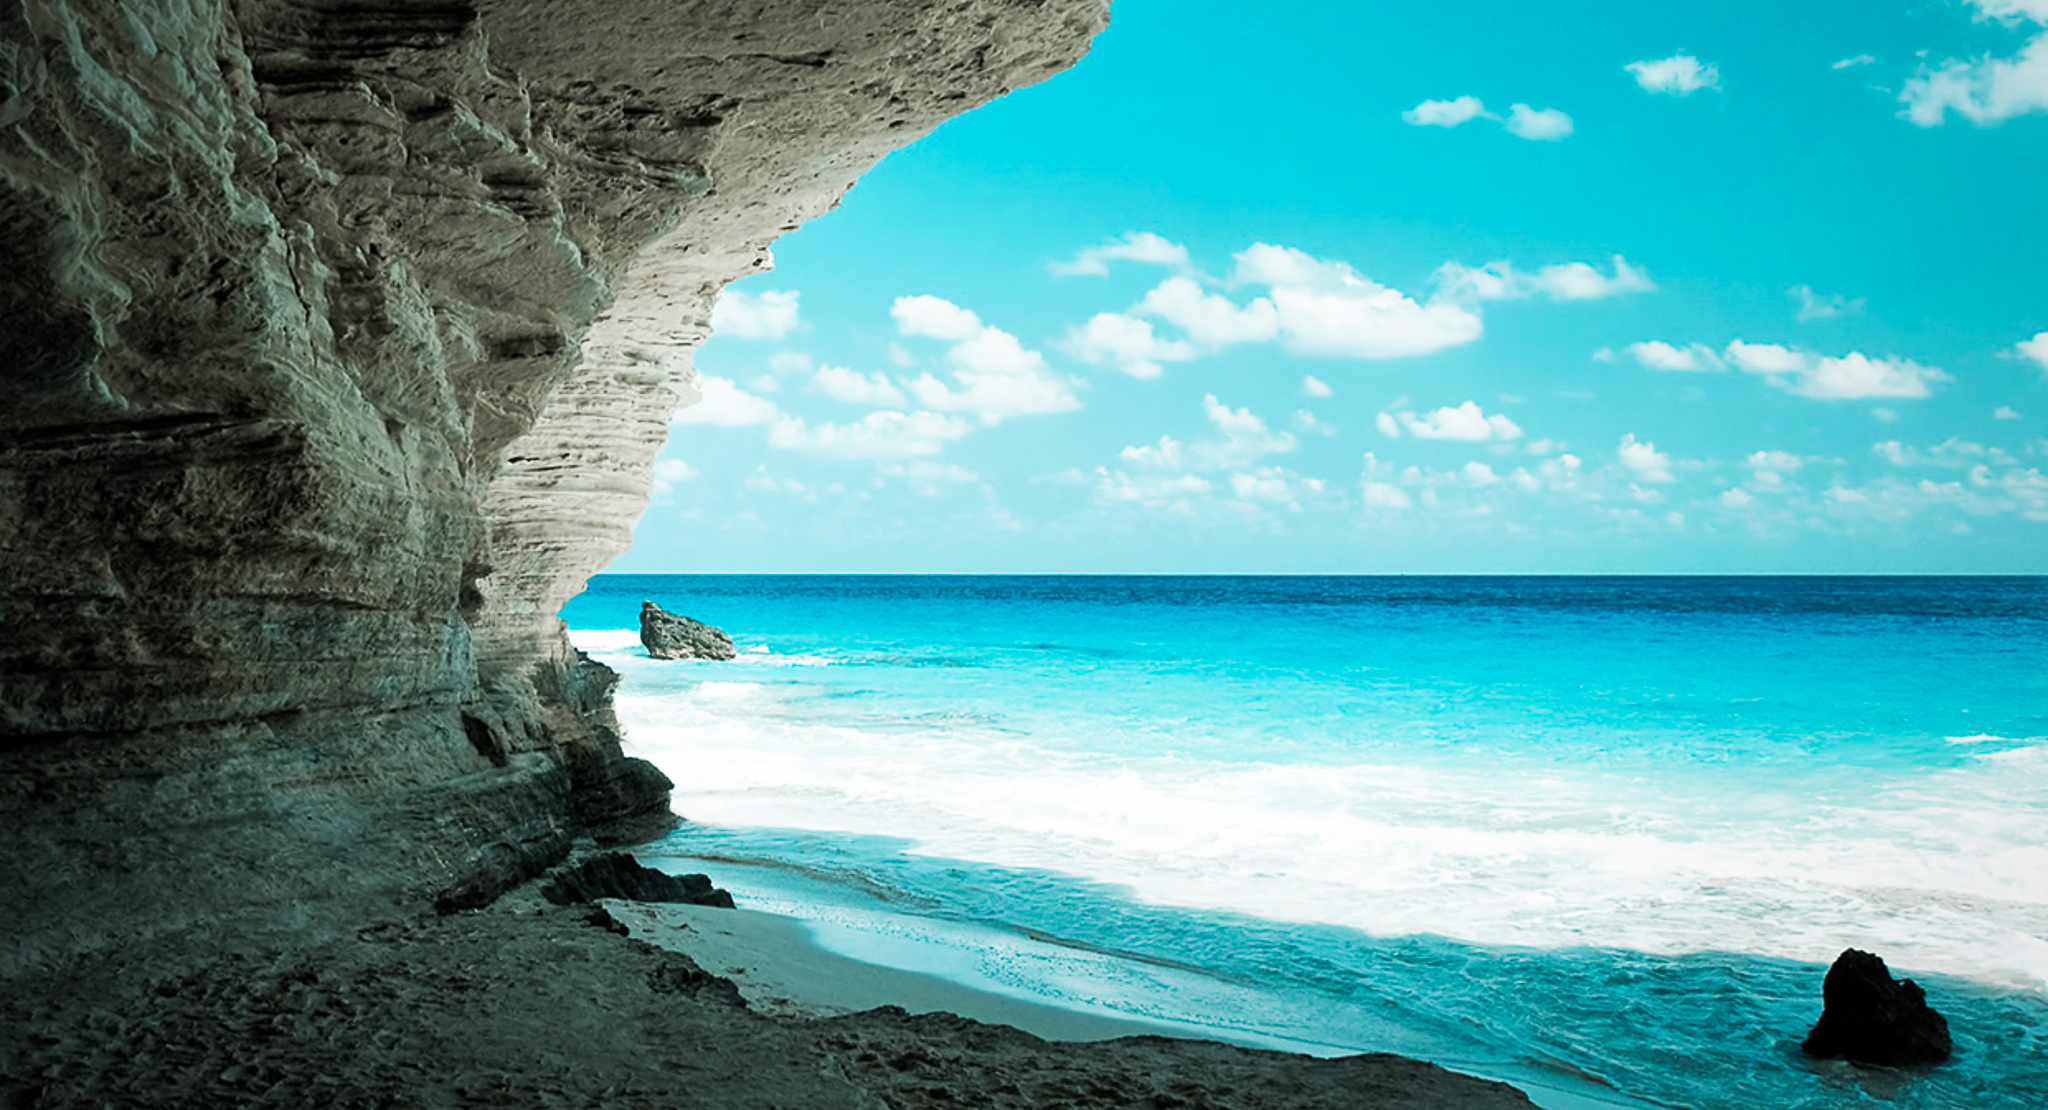 Blue Sea Cave, HD Nature, 4k Wallpaper, Image, Background, Photo